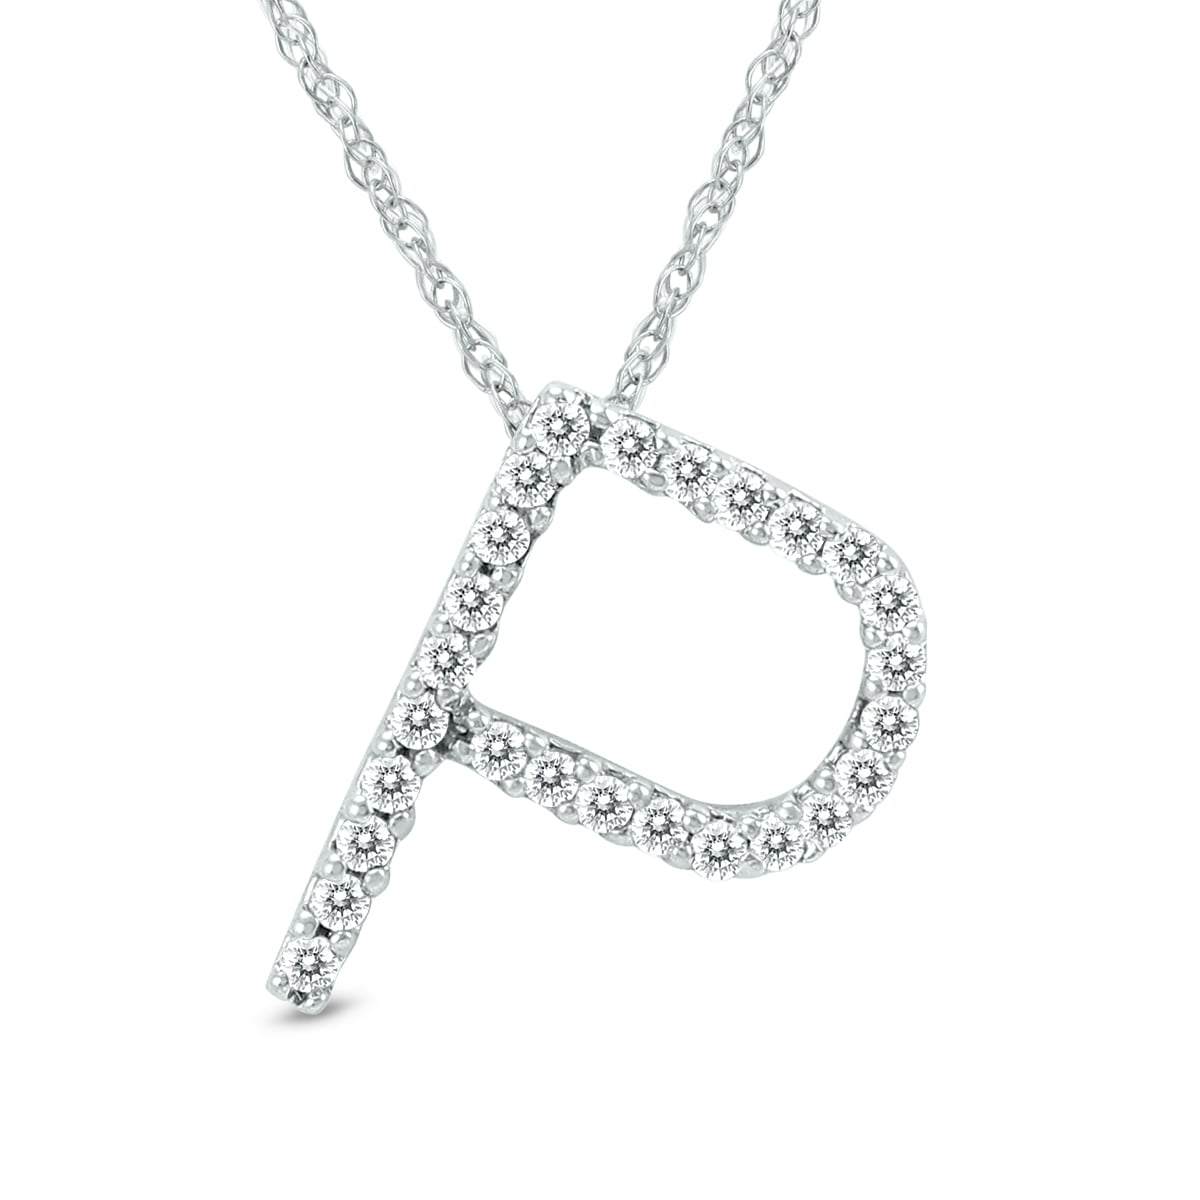 Szul Jewelry - 1/6 Carat TW P Initial Diamond Pendant Necklace in 10K